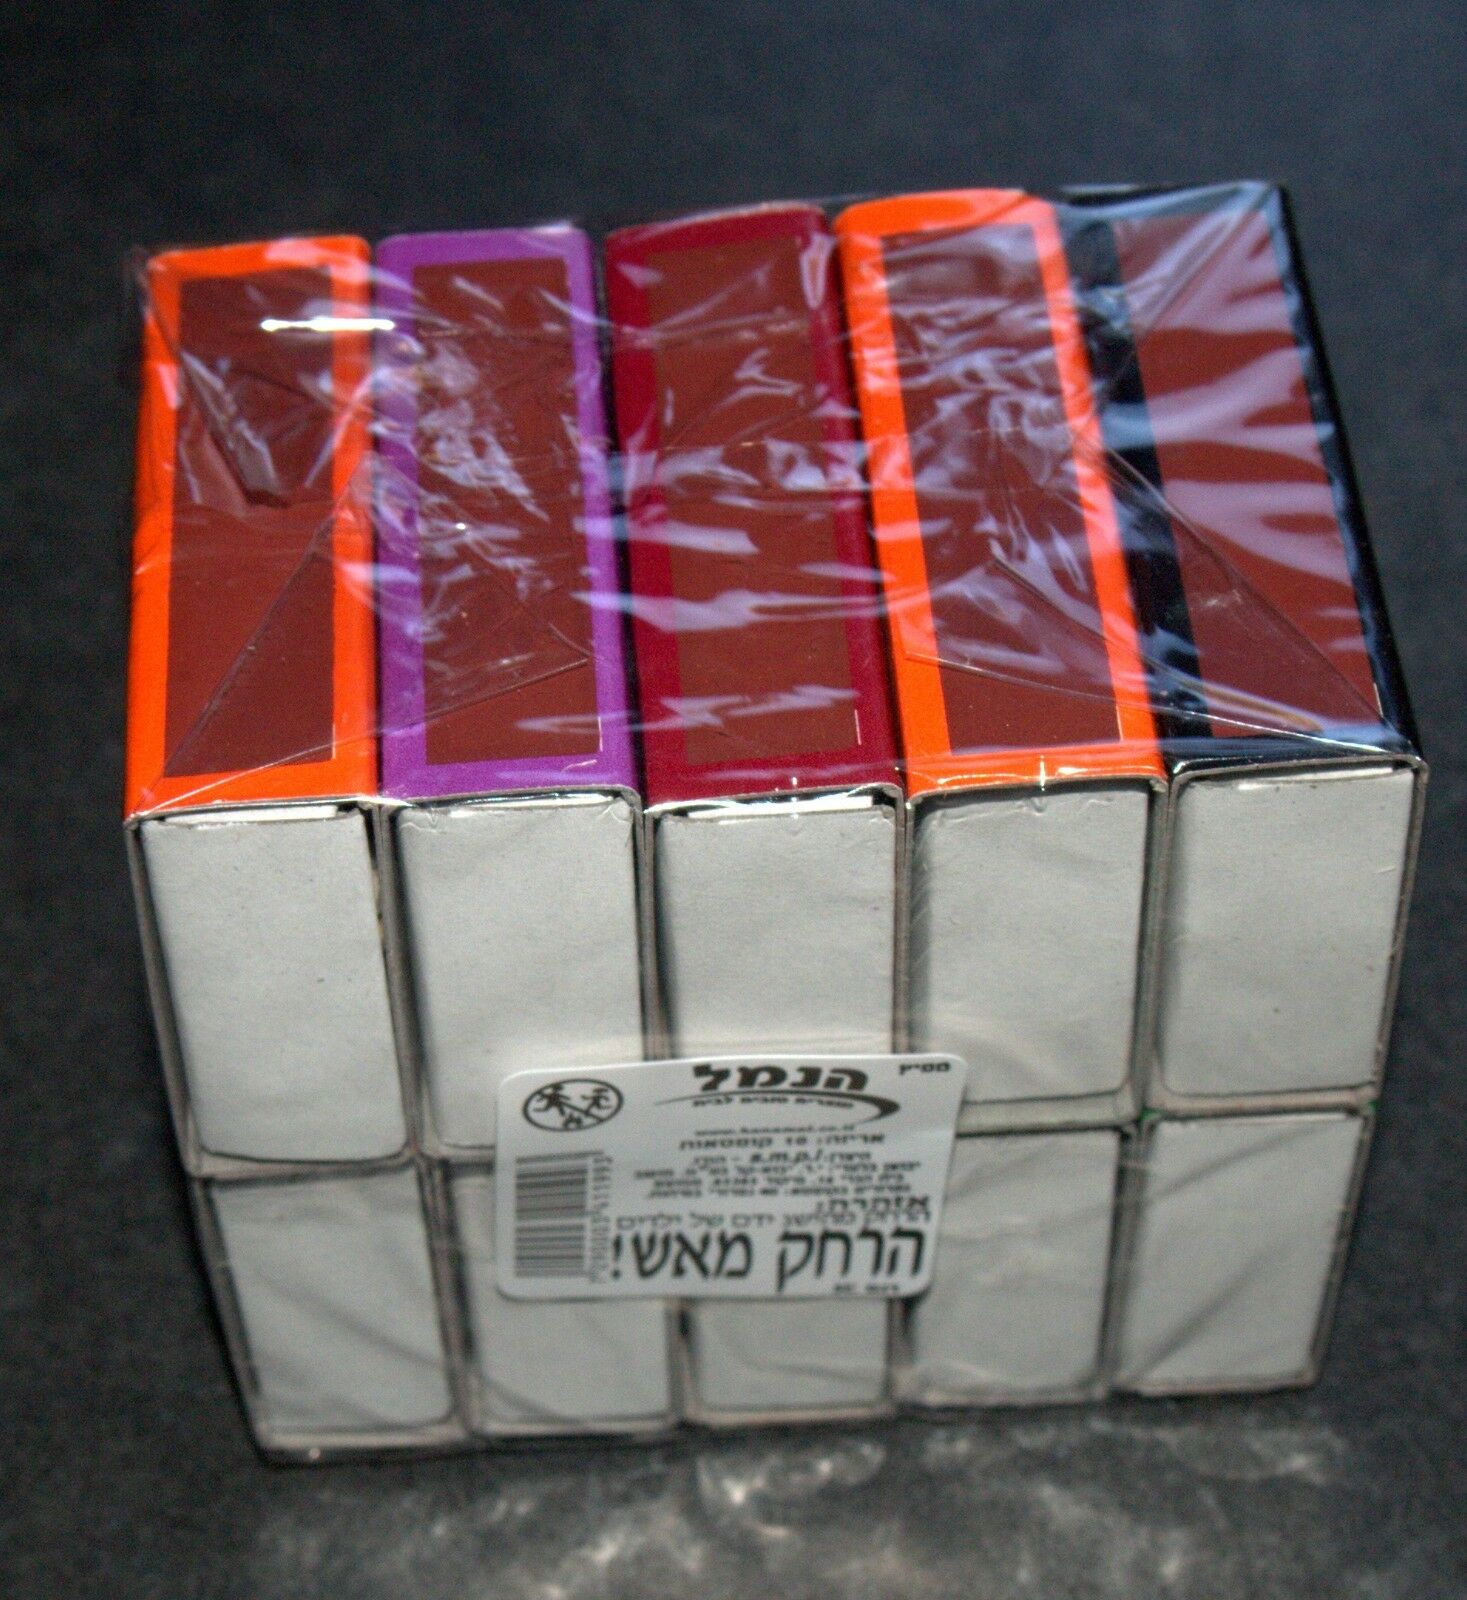 10 Matchboxes For Judaica Shabbat Holiday Match Box Holder 2" X 1.4"